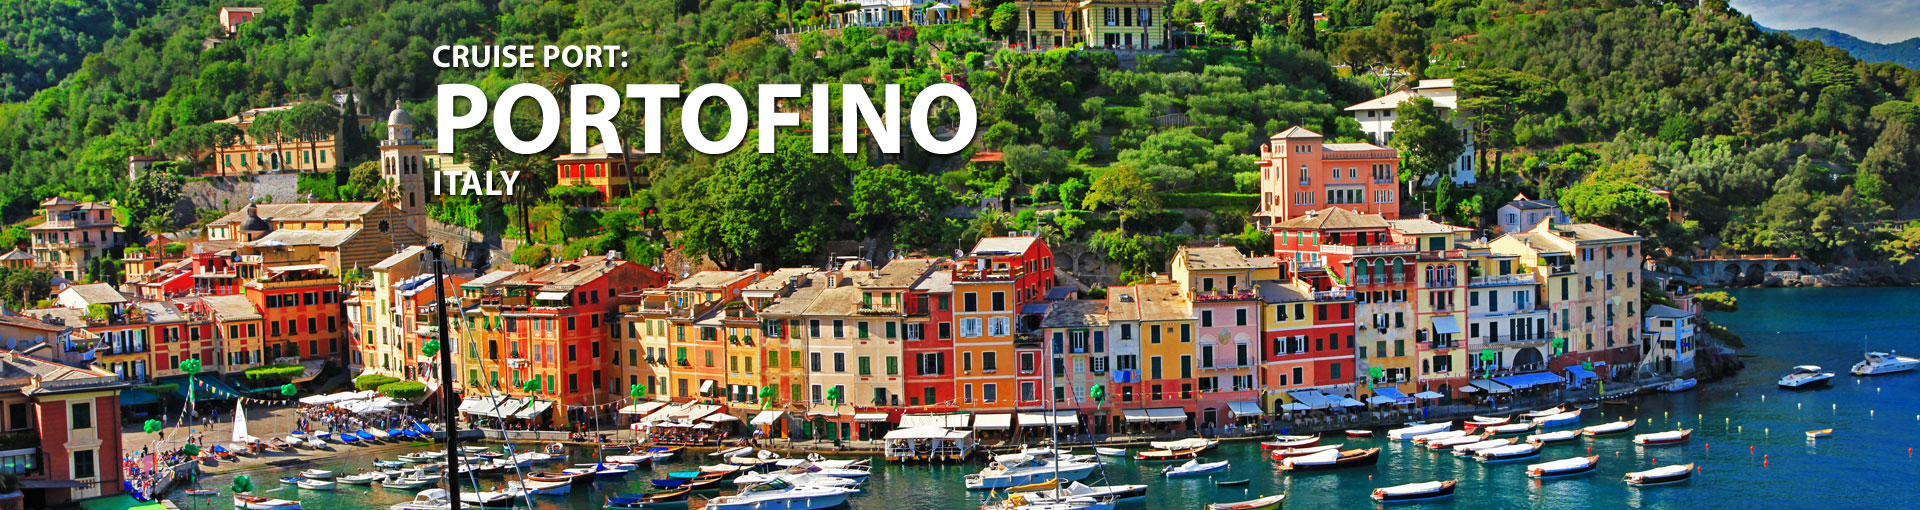 portofino-italy-cruise-port-banner